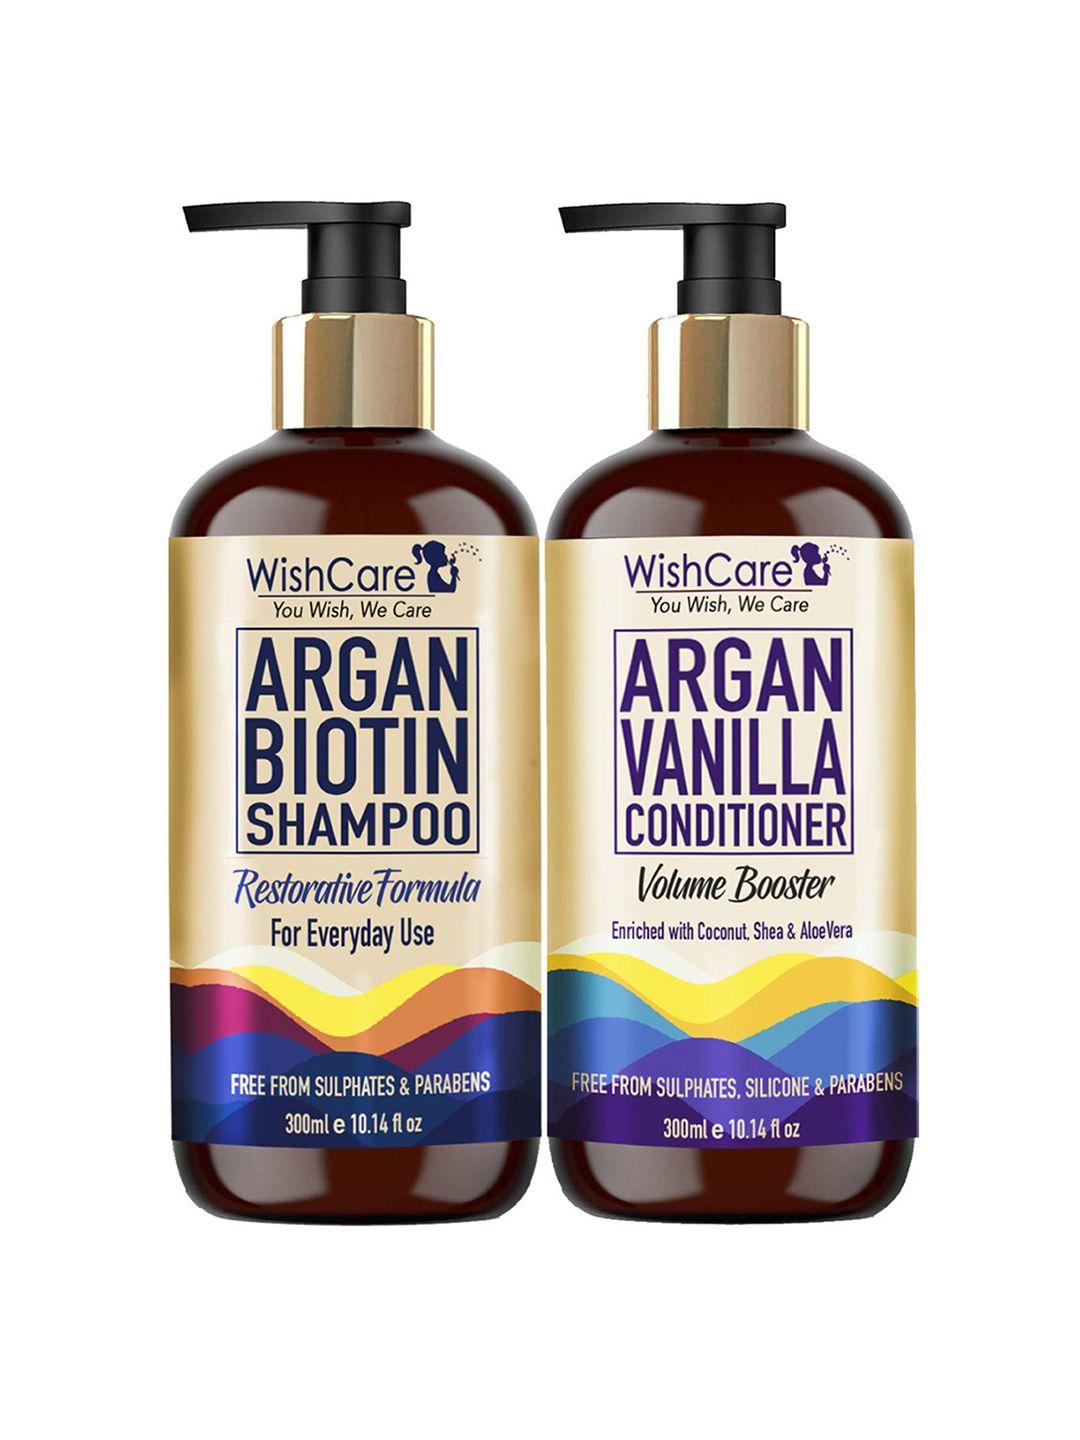 wishcare argan biotin shampoo and argan vanilla conditioner - 300 ml each